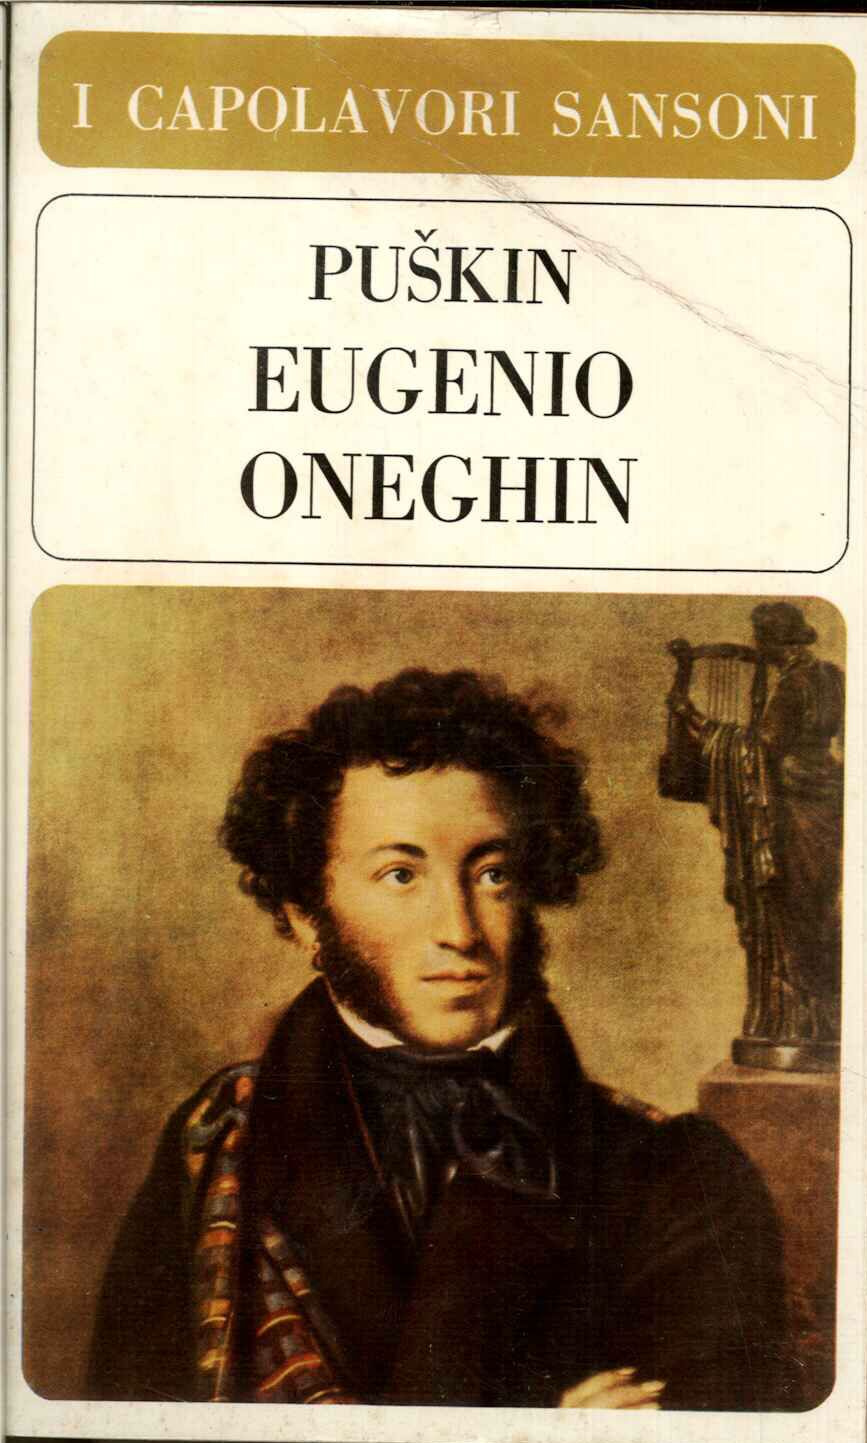 Eugenio Oneghin